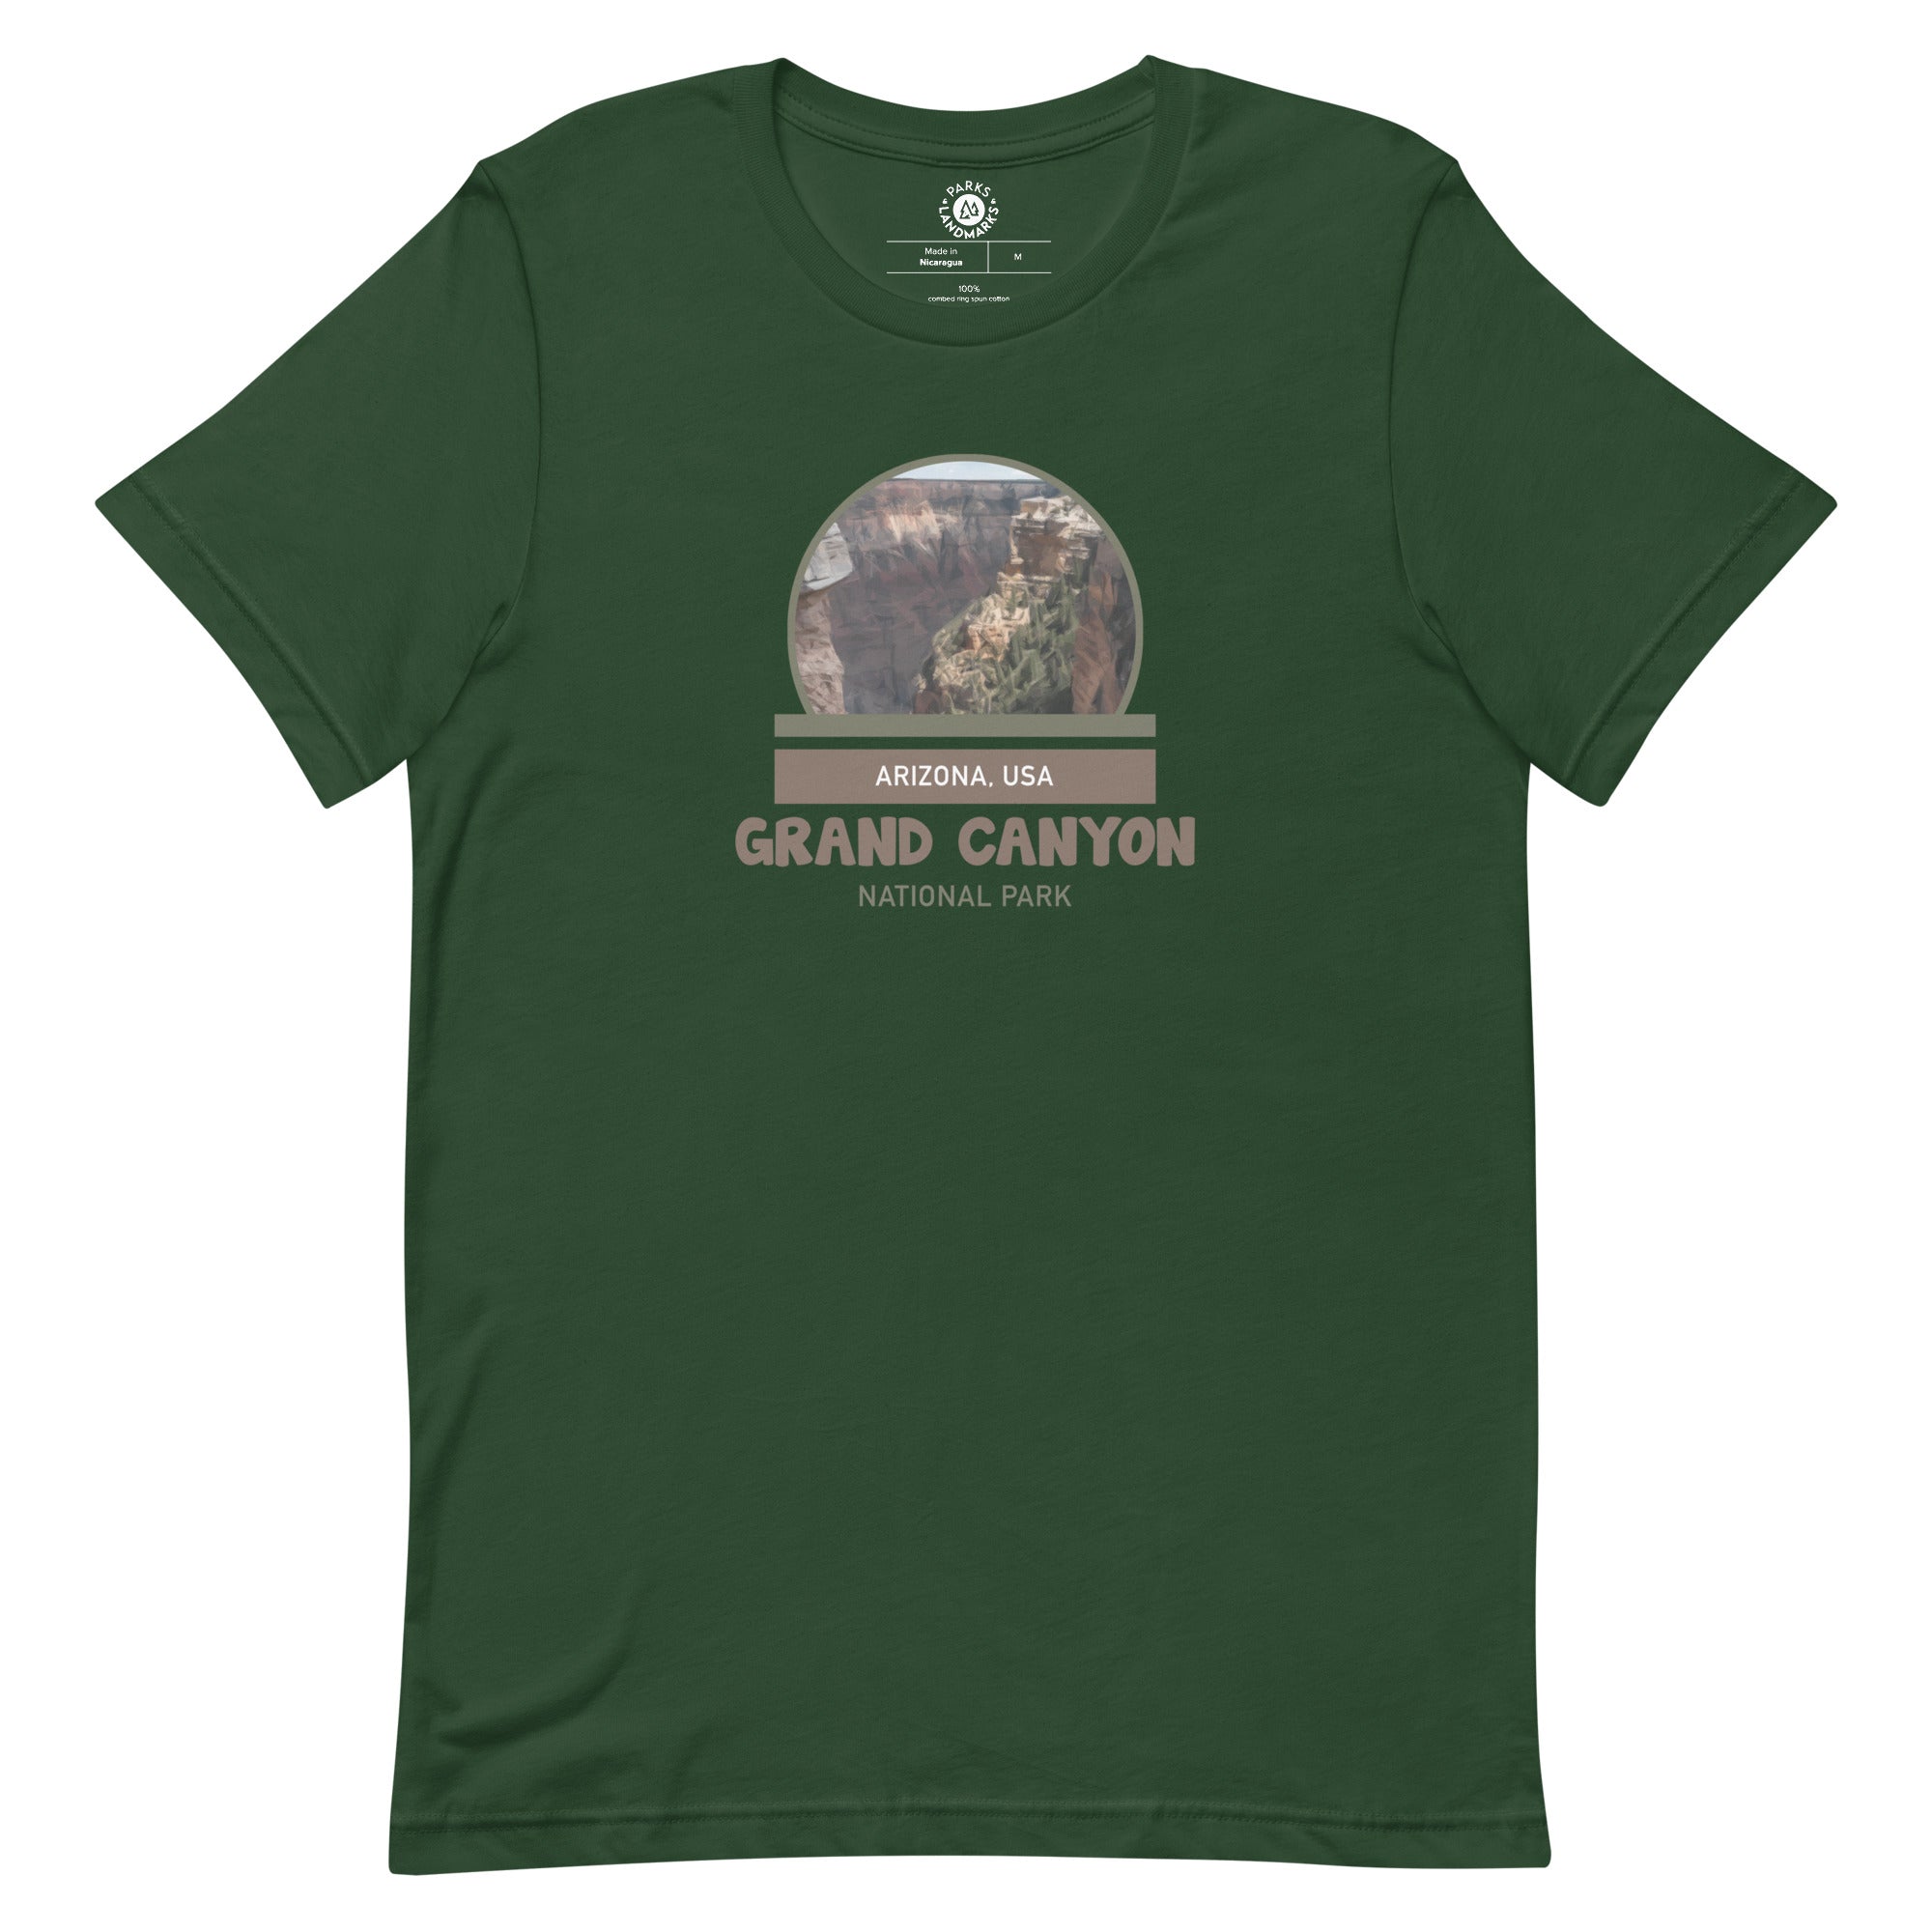 Grand Canyon “Rep The State” Shirt - Grand Canyon National Park Shirt